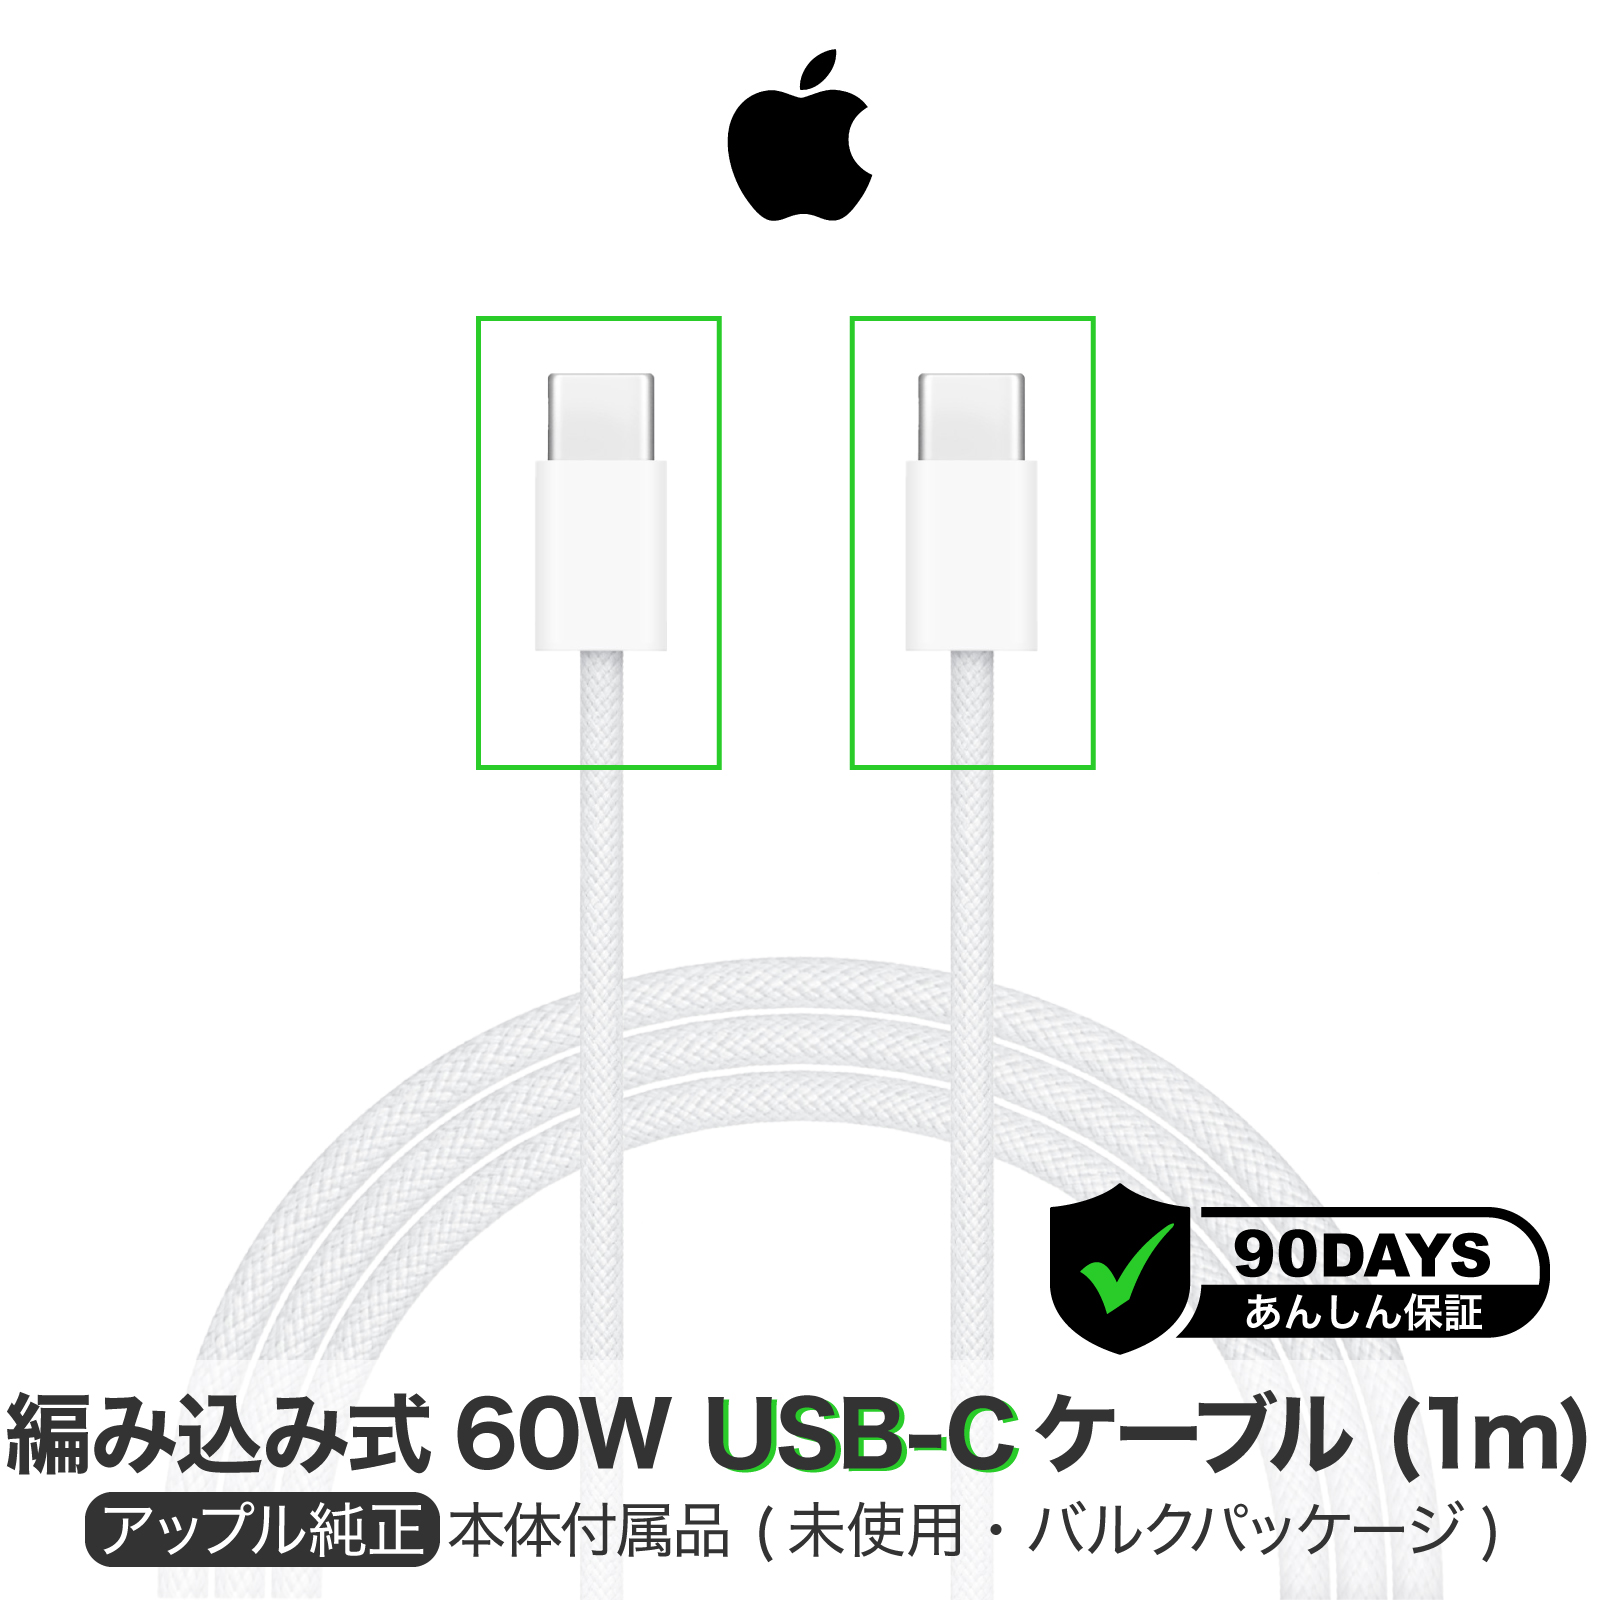 Apple 純正 60W USB-C ケーブル iPhone15 iPad Pro Type-C Apple 純正